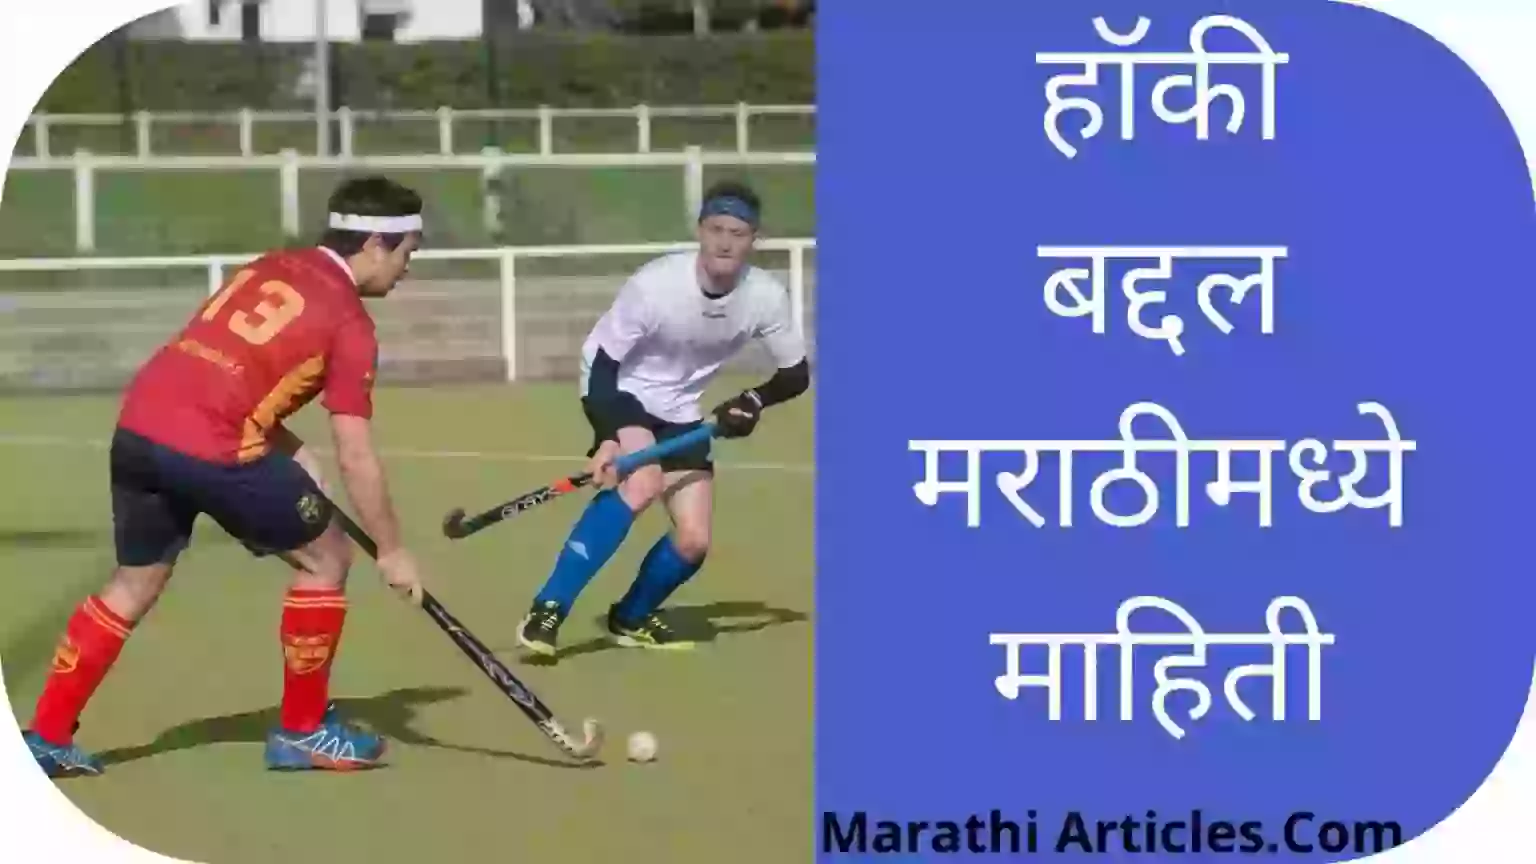 information about hockey in marathi